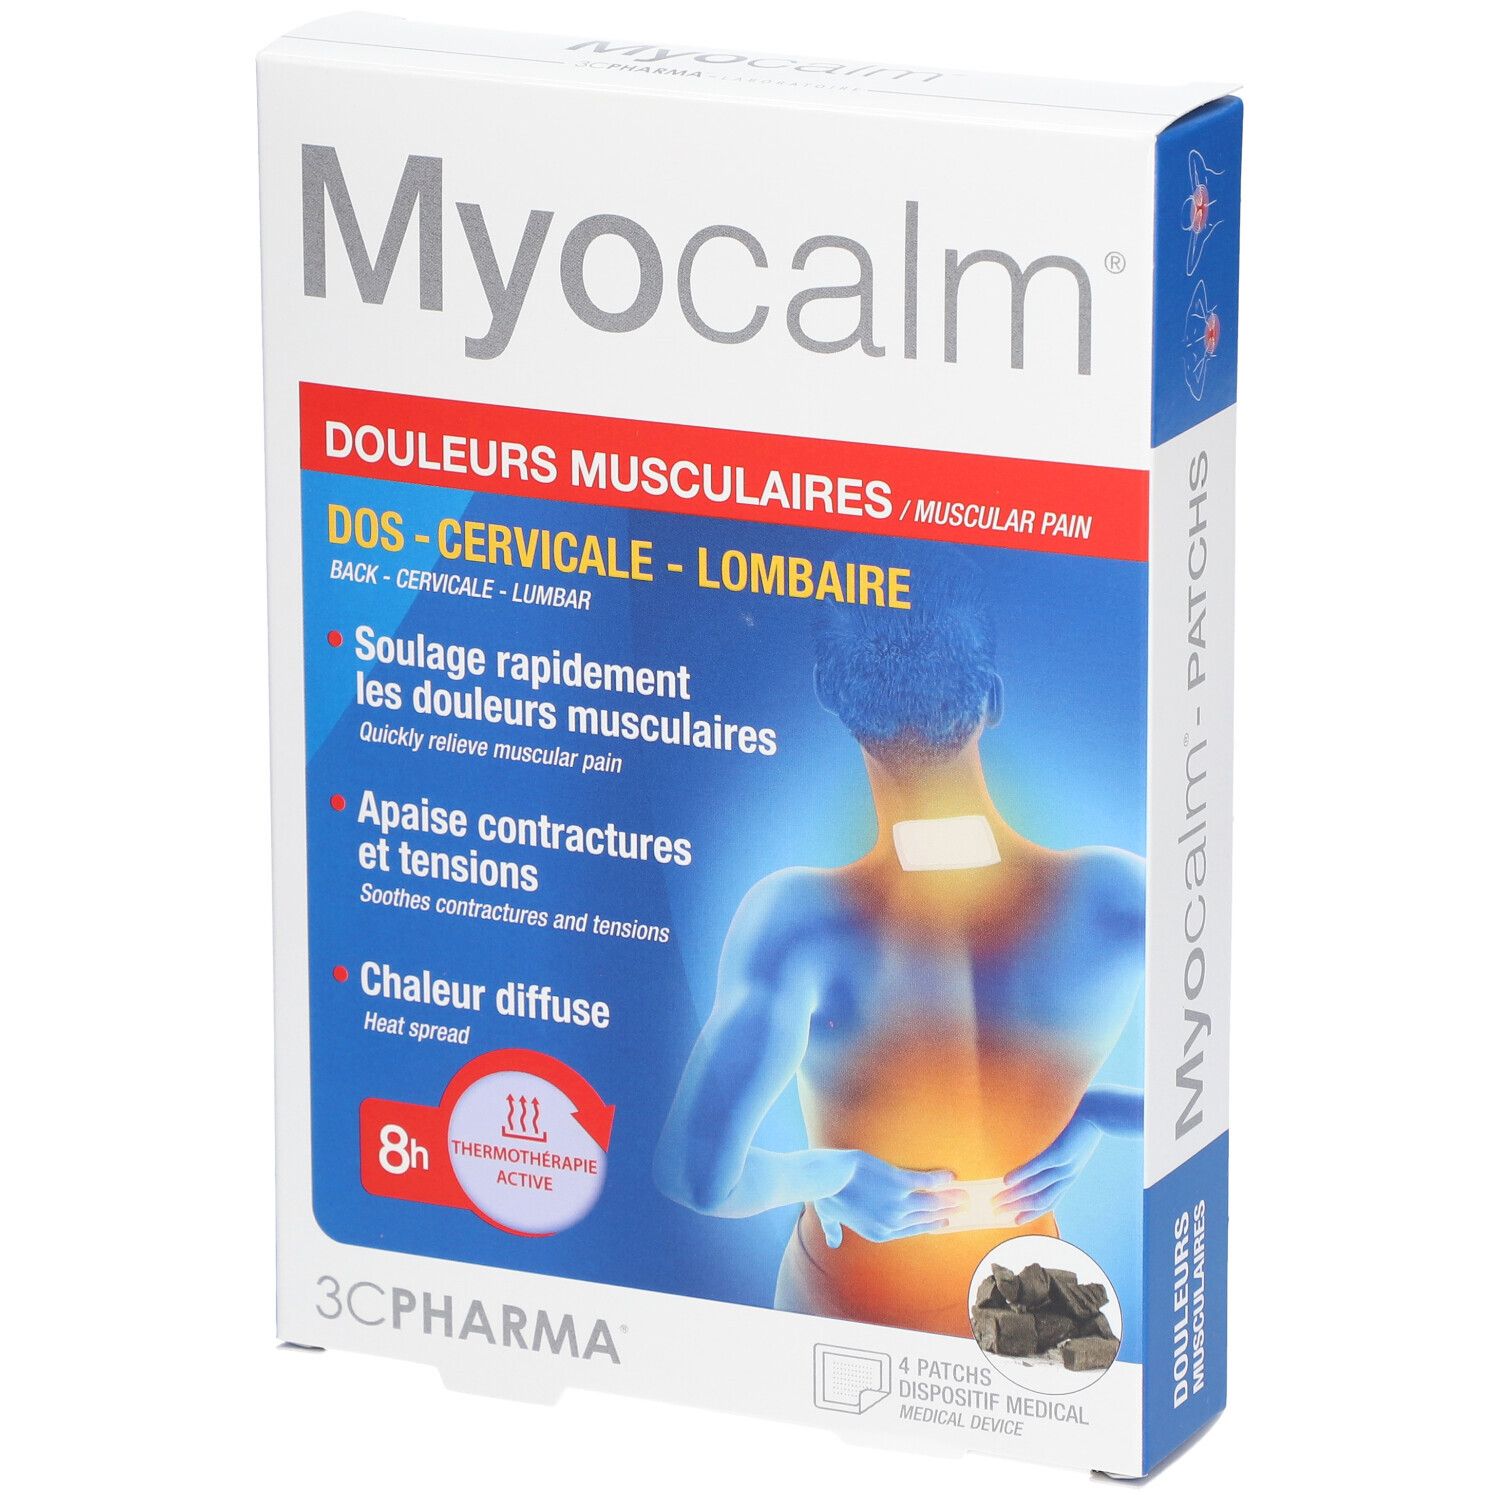 Myocalm® Douleurs Musculaires